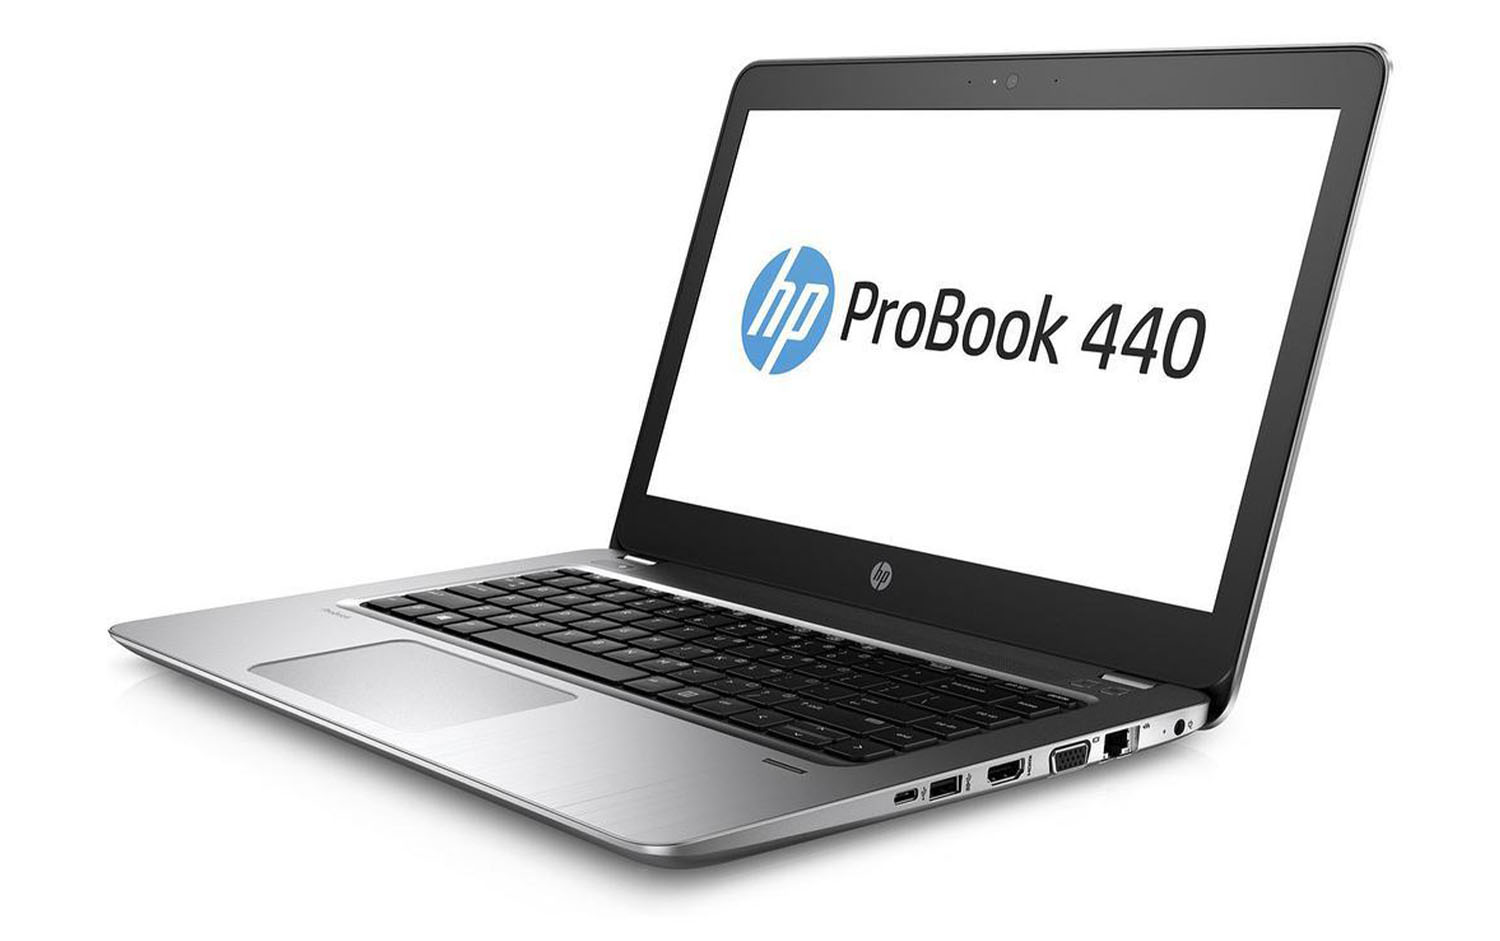 HP ProBook 440 G4 Intel Core i7 7th Gen 16GB RAM 256GB SSD Windows 10 Pro